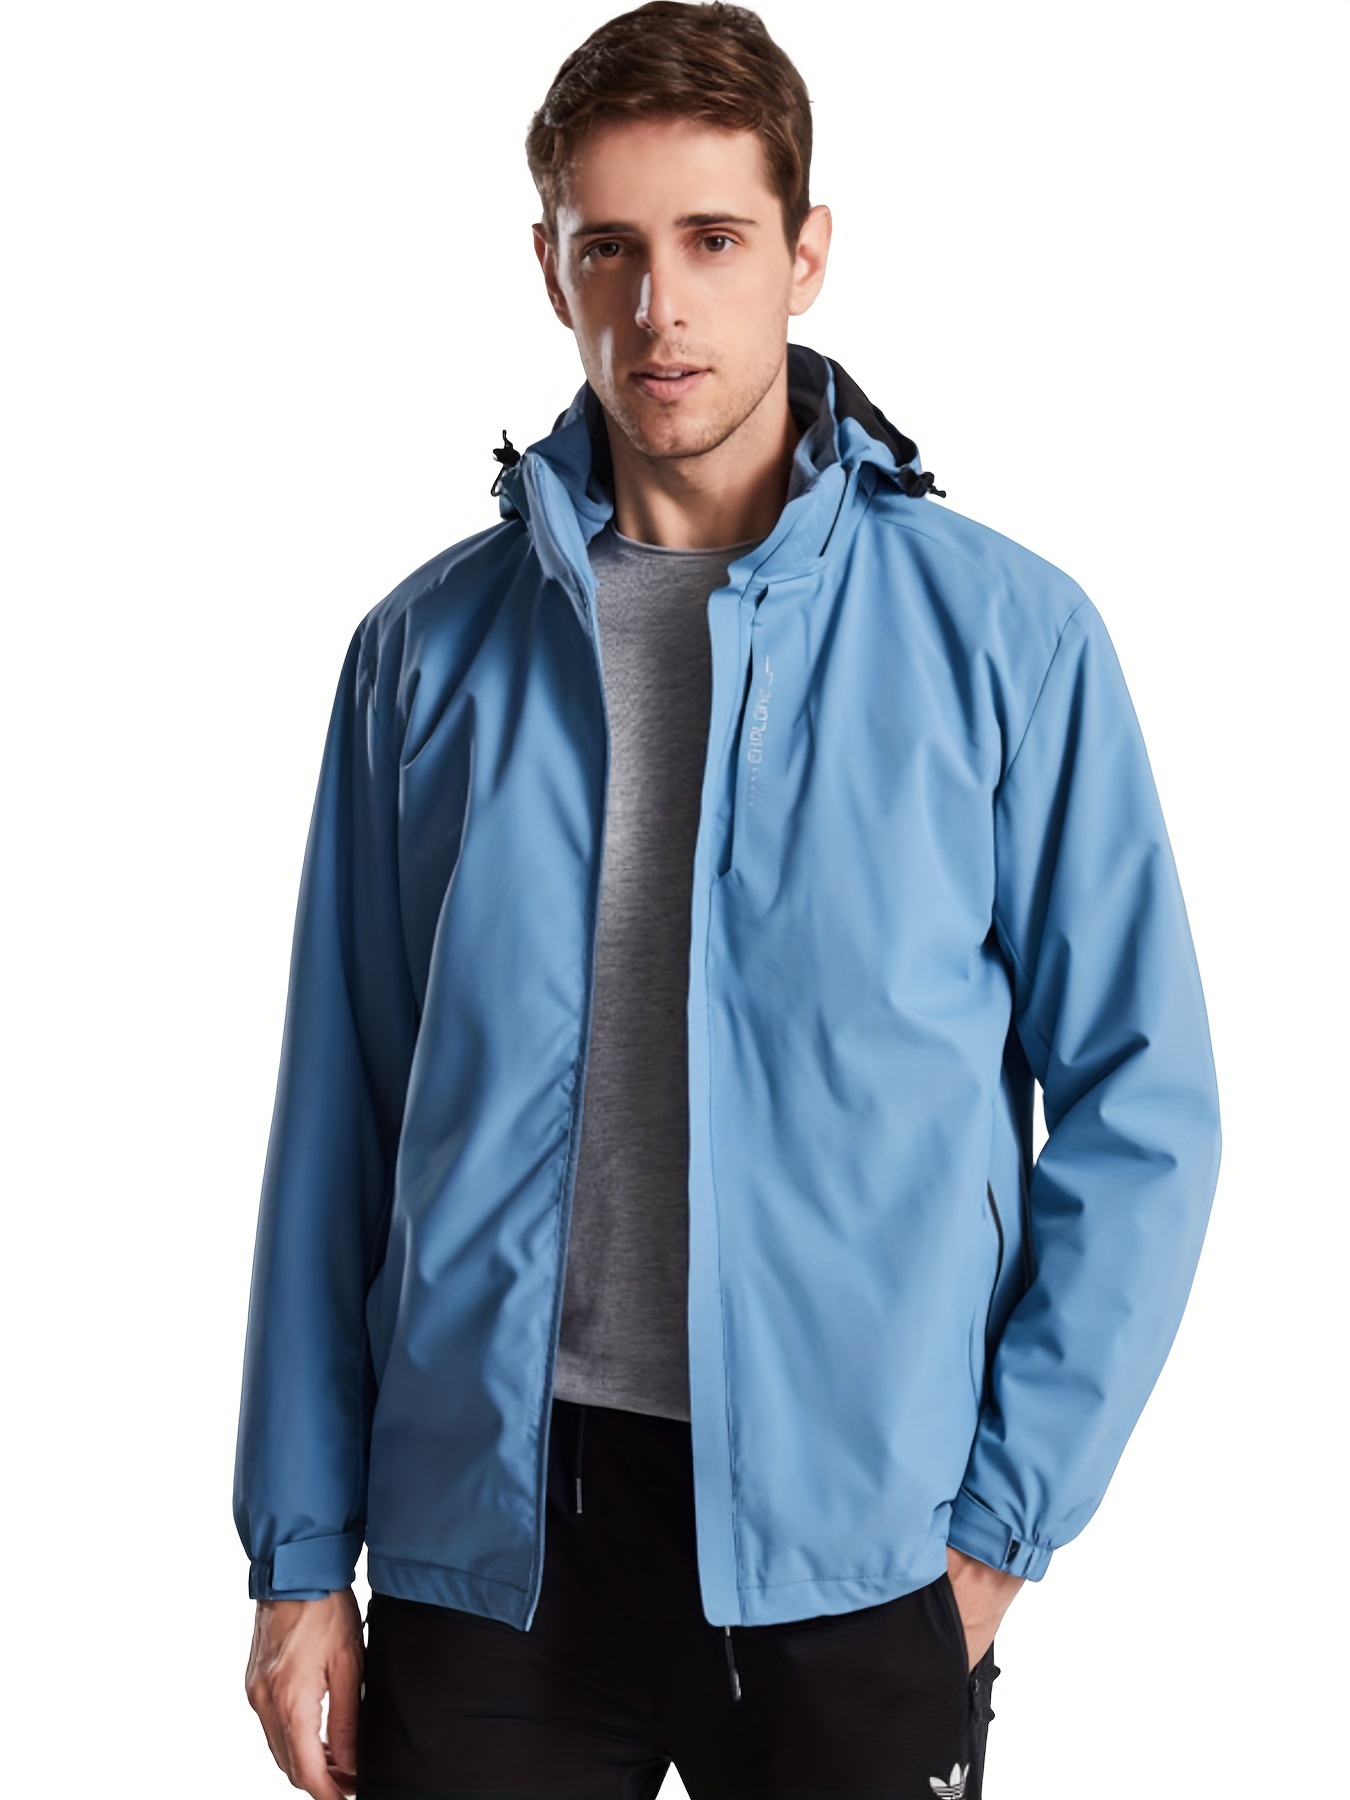 Men's Lightweight Resistant Hiking Jacket Hooded Shell Jacket for